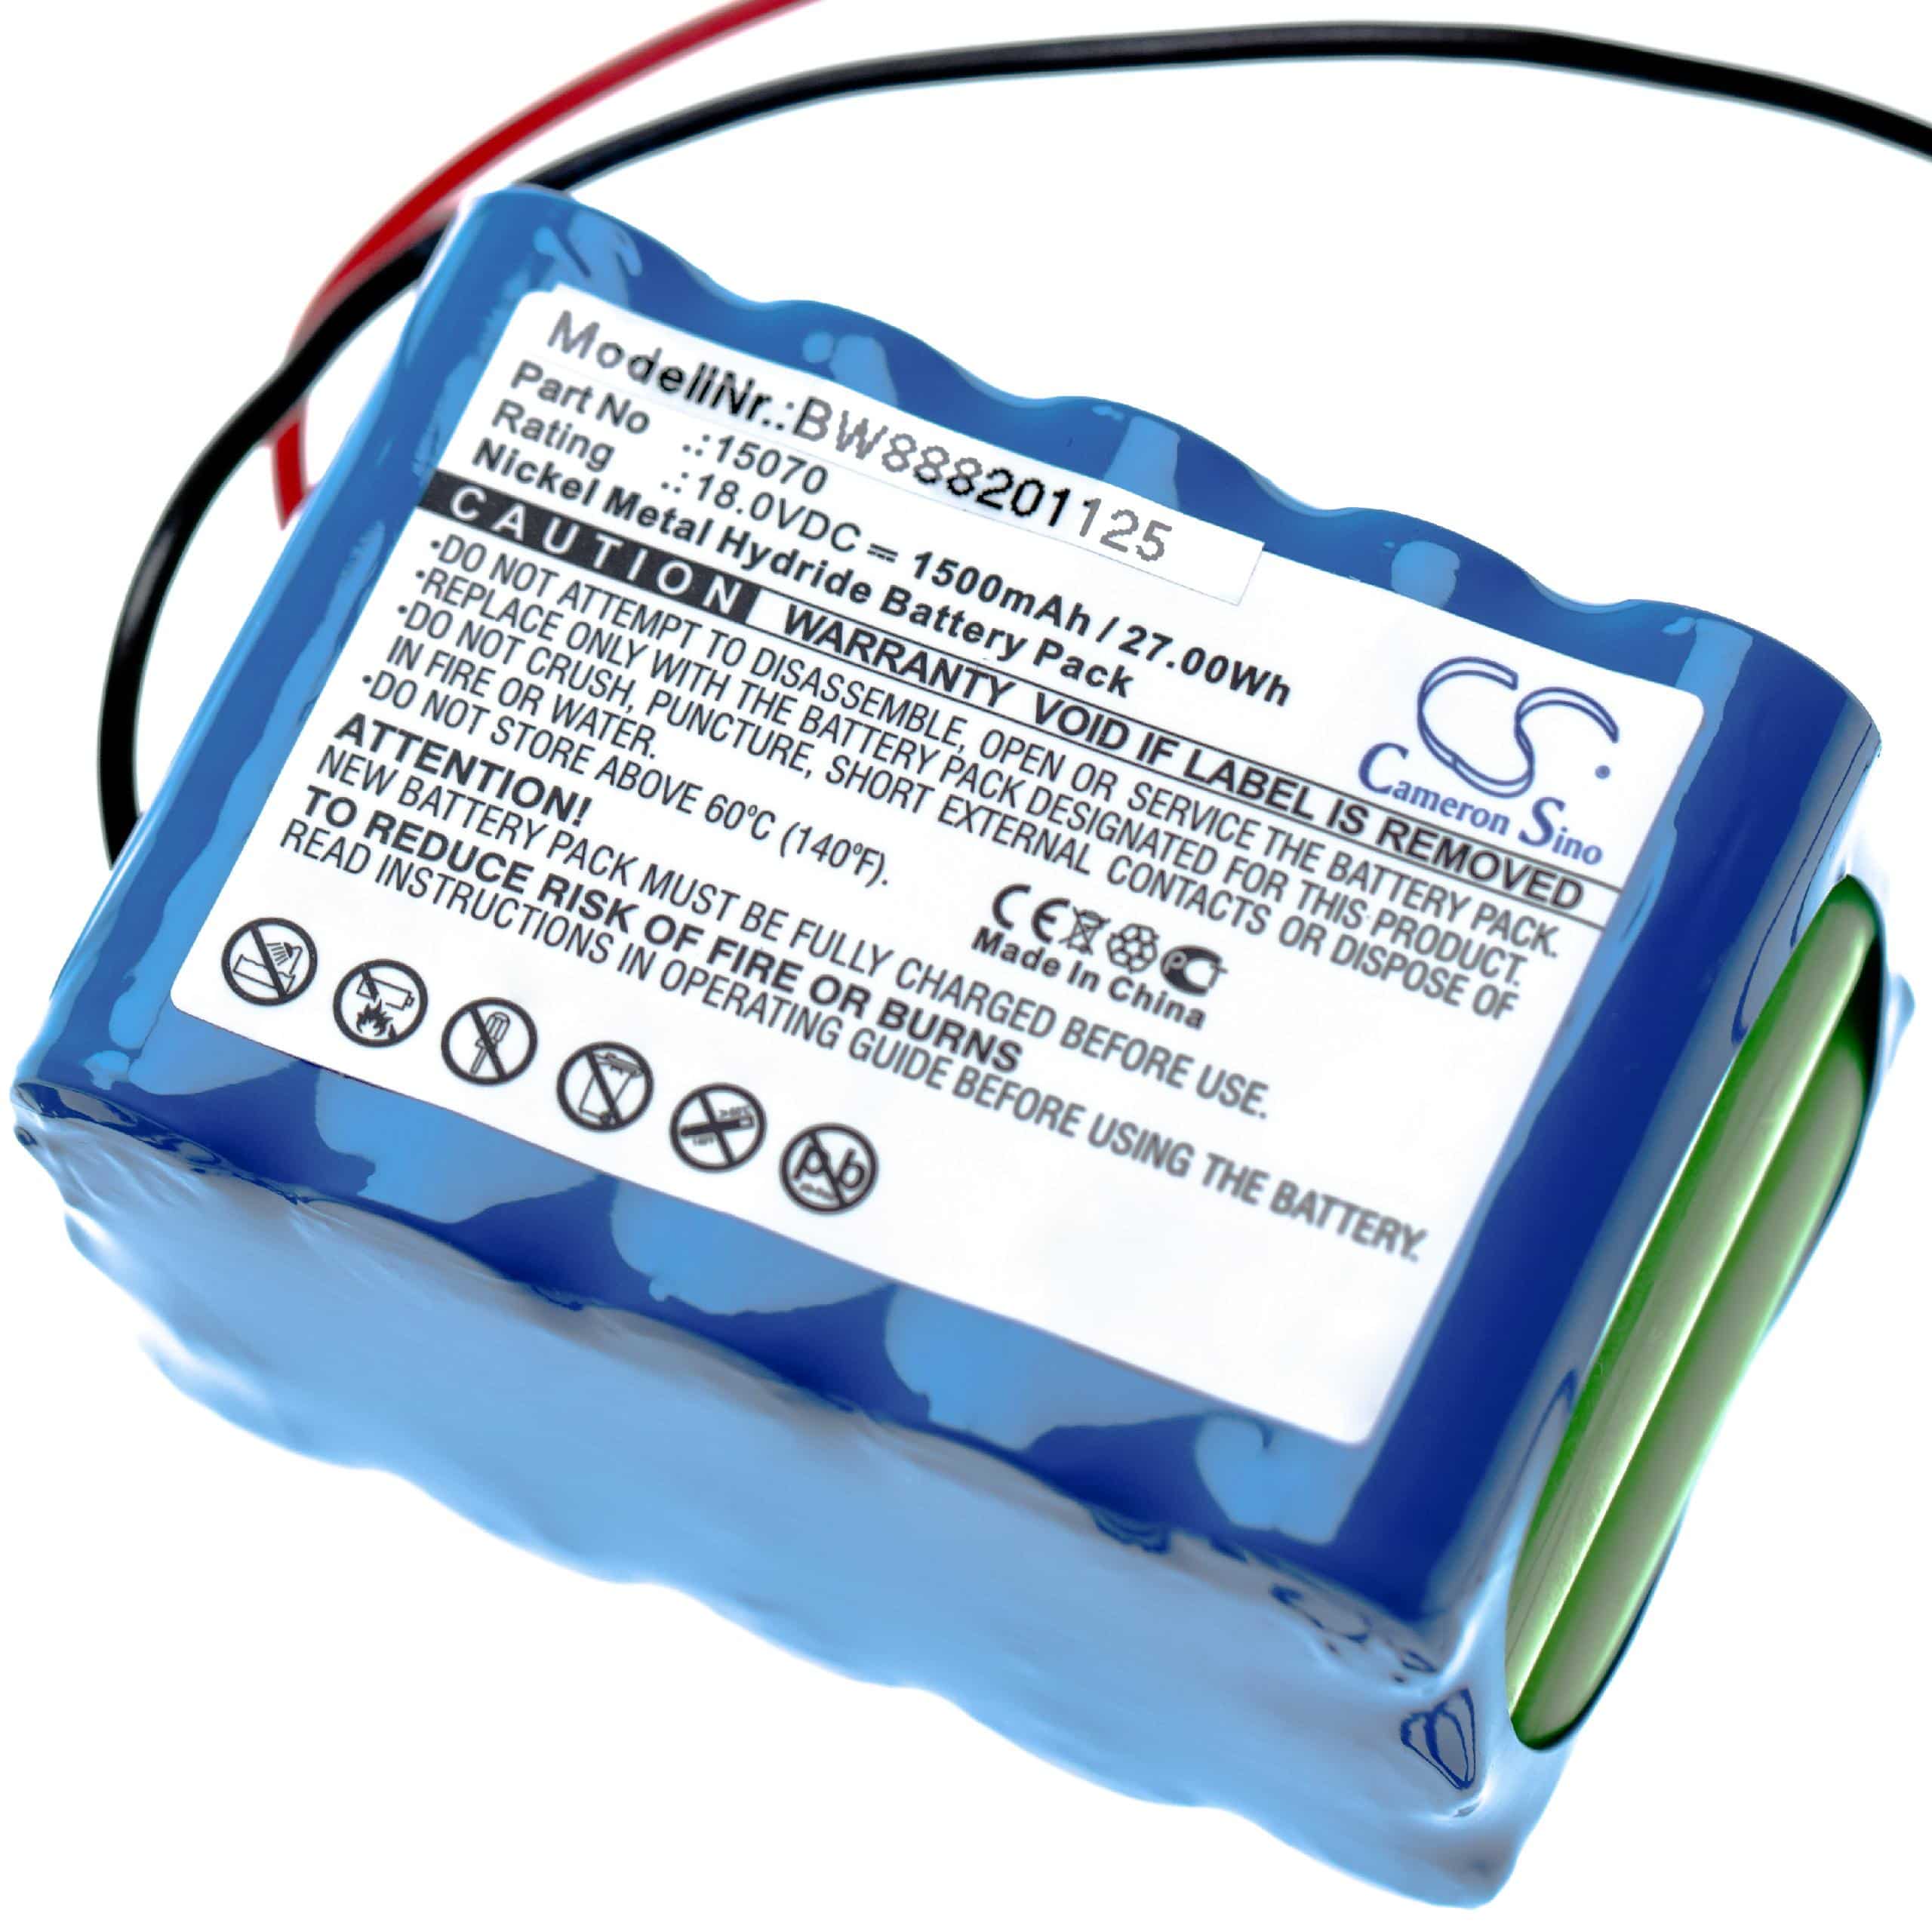 Sliding Gate Operator Battery Replacement for Besam 15070, 15VREAAL700R, 15VREAAL, 3365000 - 1500mAh 18V NiMH